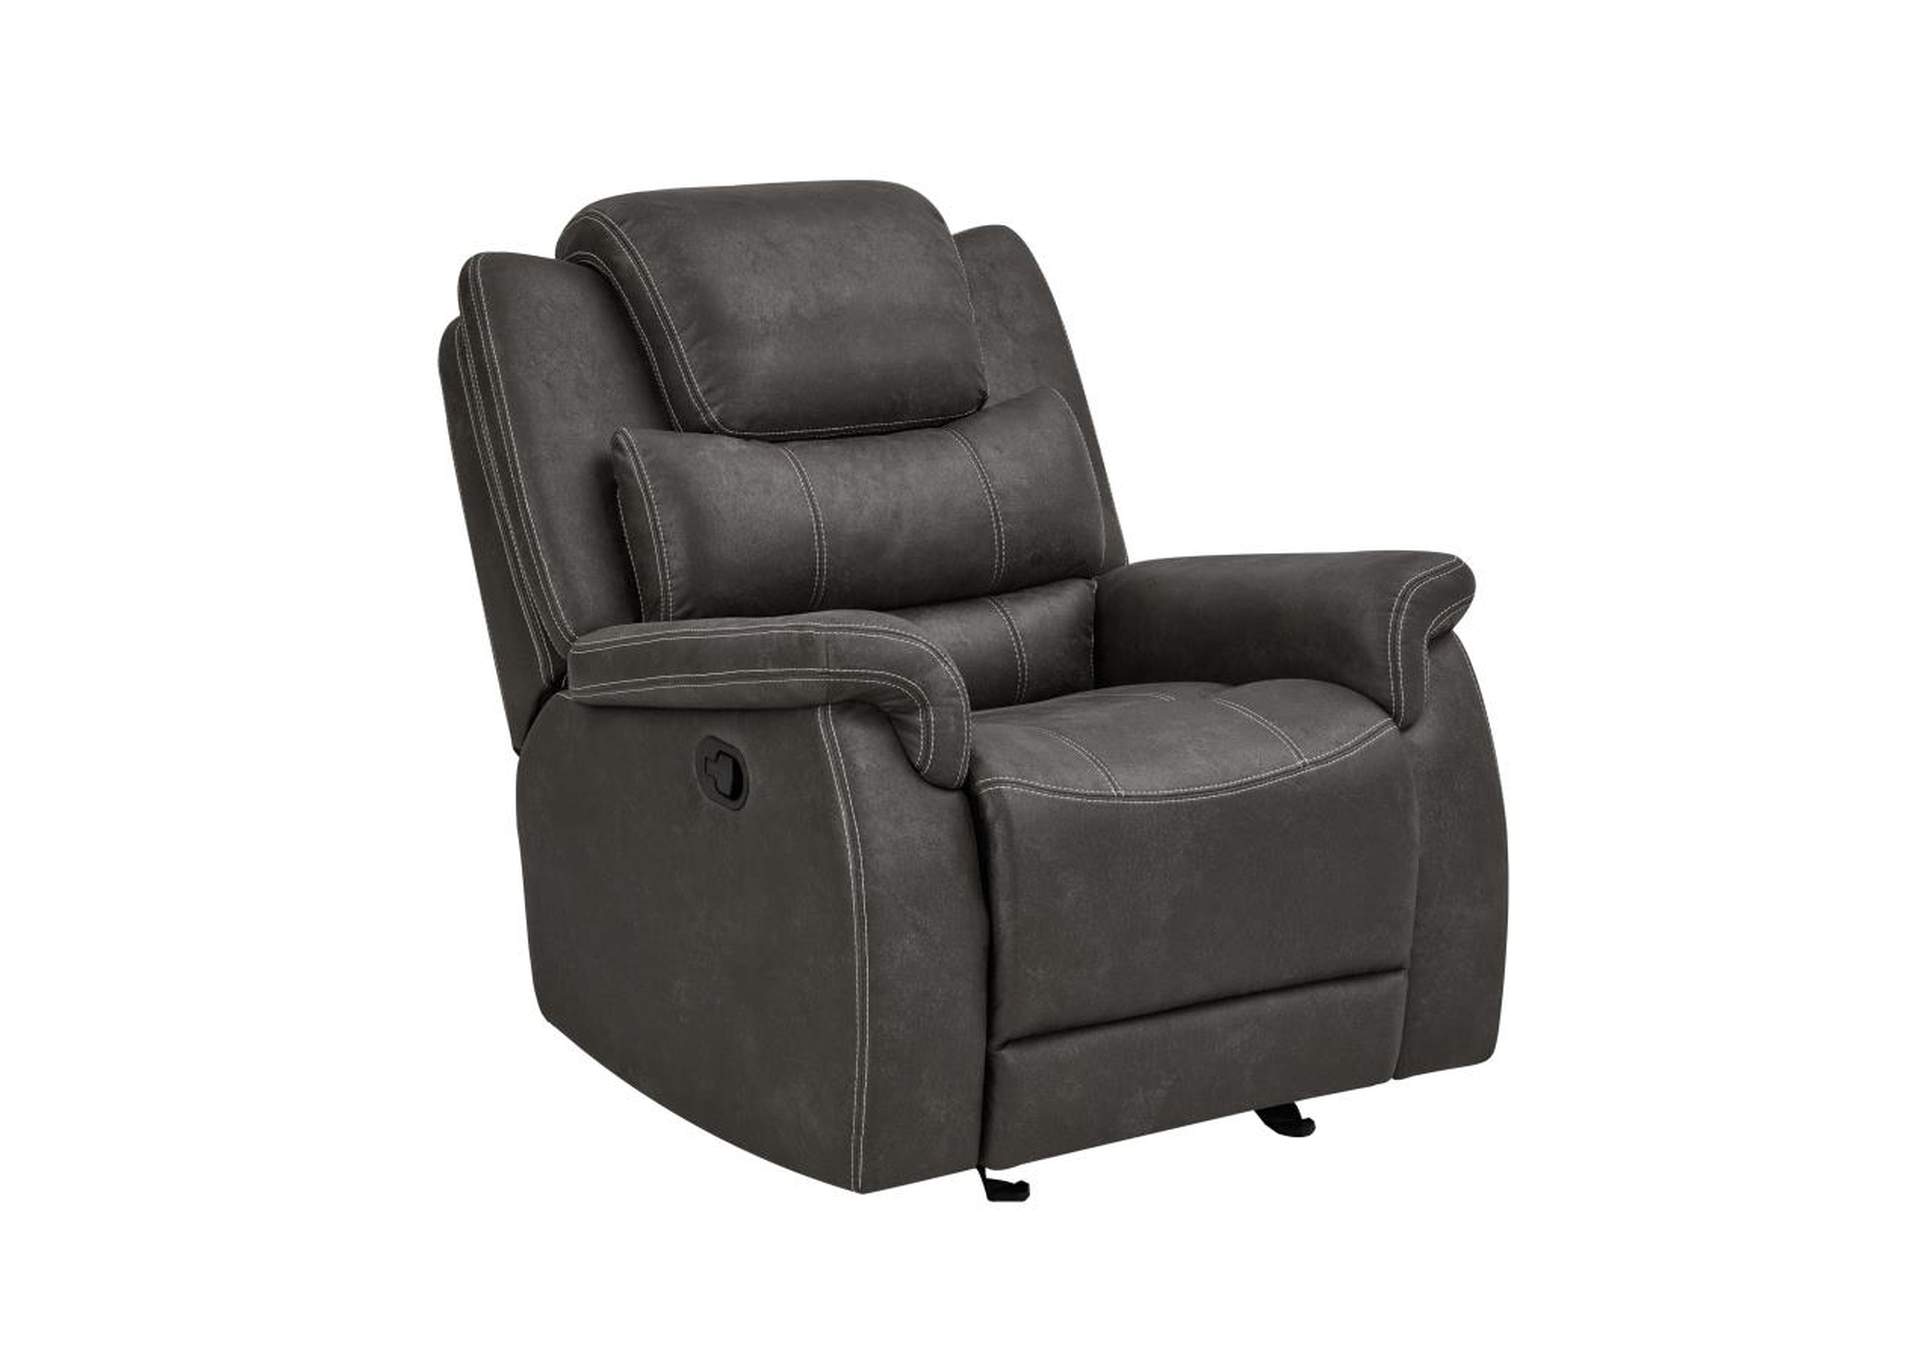 Wyatt Upholstered Glider Recliner Grey,Coaster Furniture